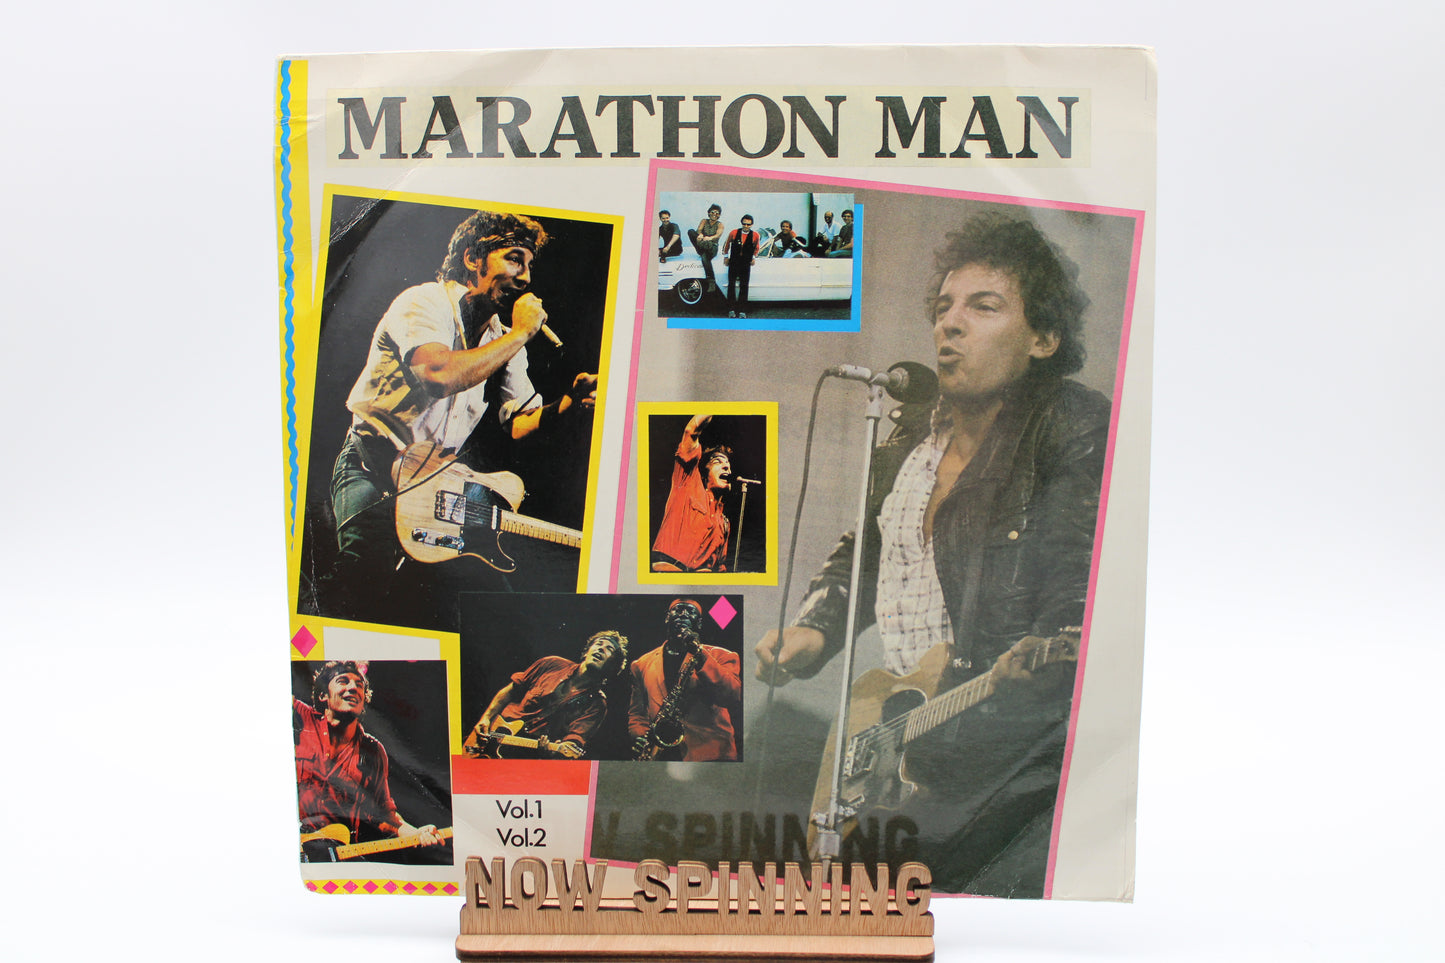 Bruce Springsteen & The E Street Band - Marathon Man - Vol. 1 Vinyl 2LPs + Vol. 2 Vinyl 2LPs BLV